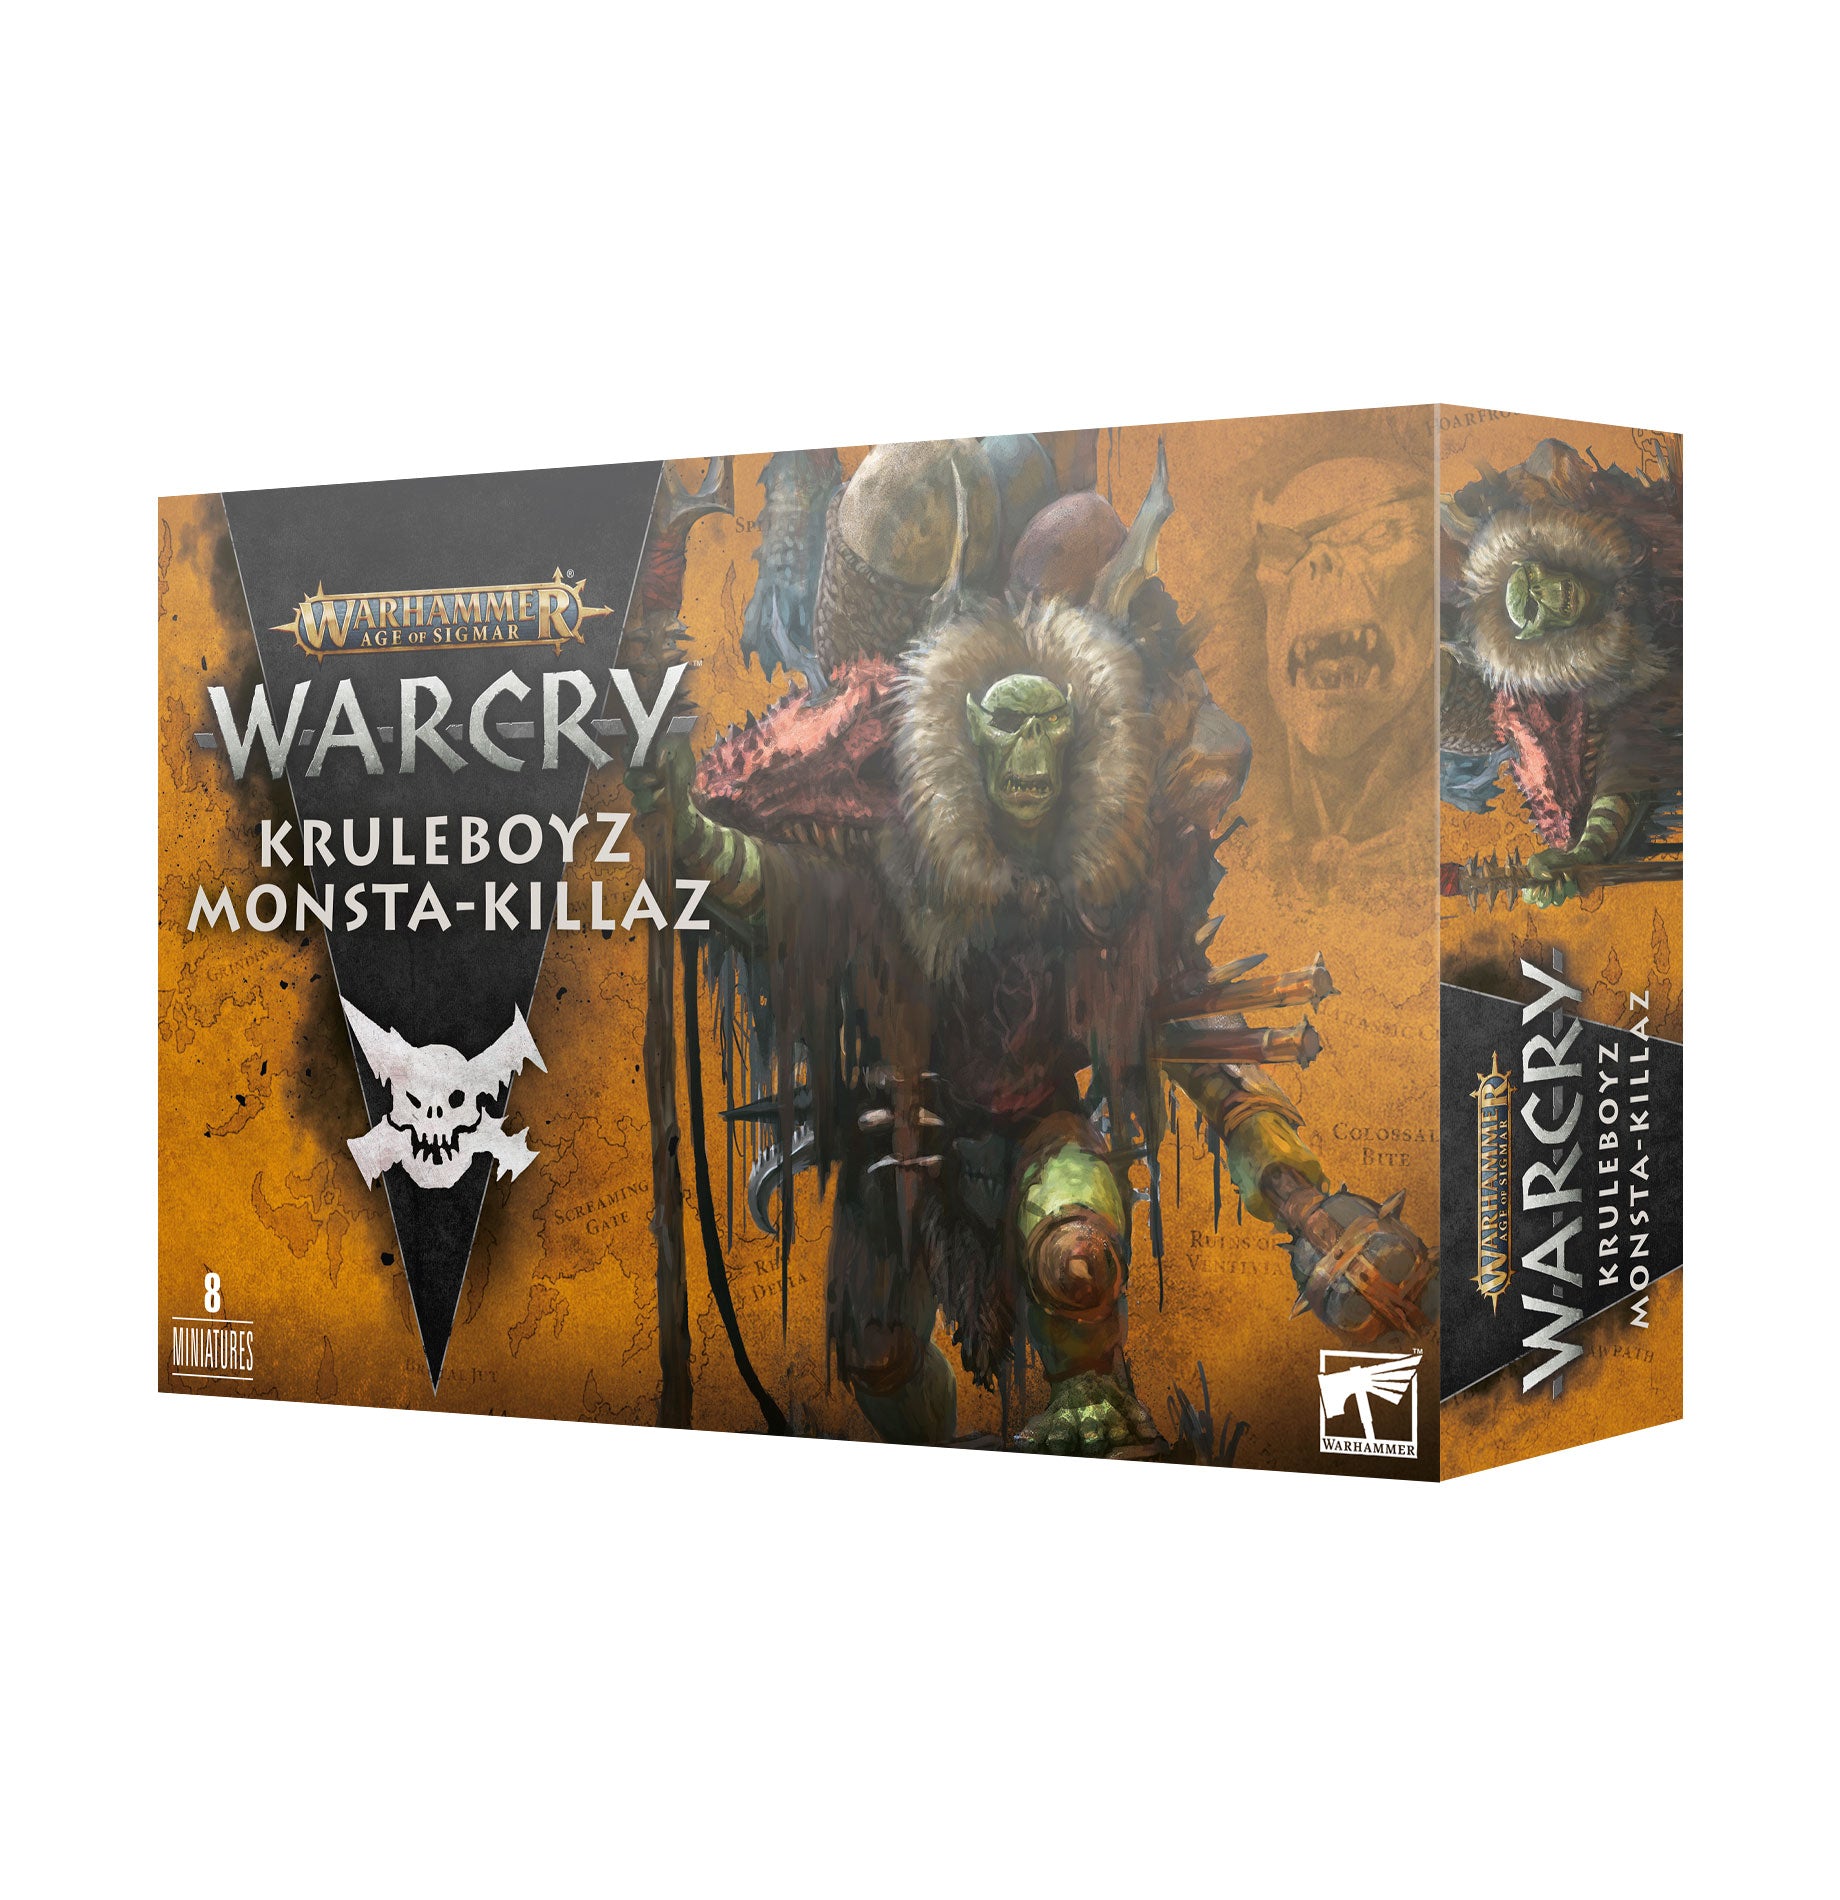 Warhammer Warcry: Kruleboyz Monsta-Killaz